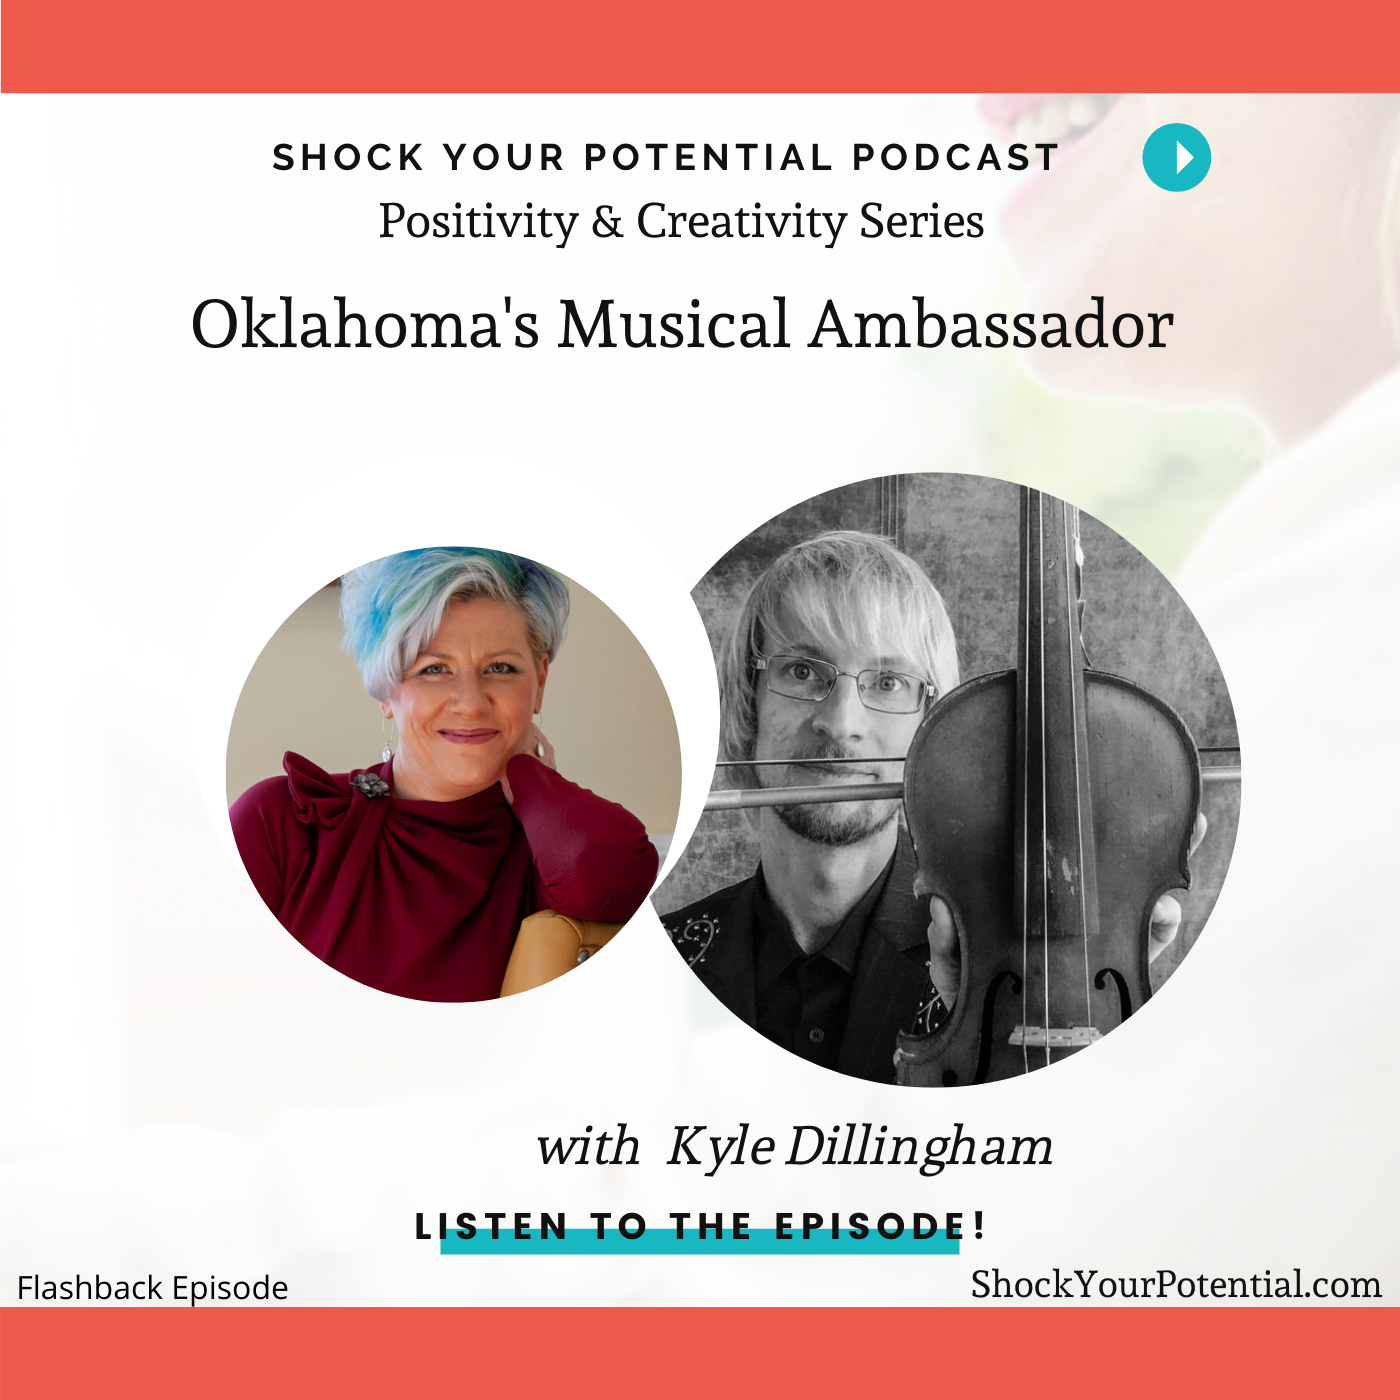 Oklahoma’s Musical Ambassador – Kyle Dillingham